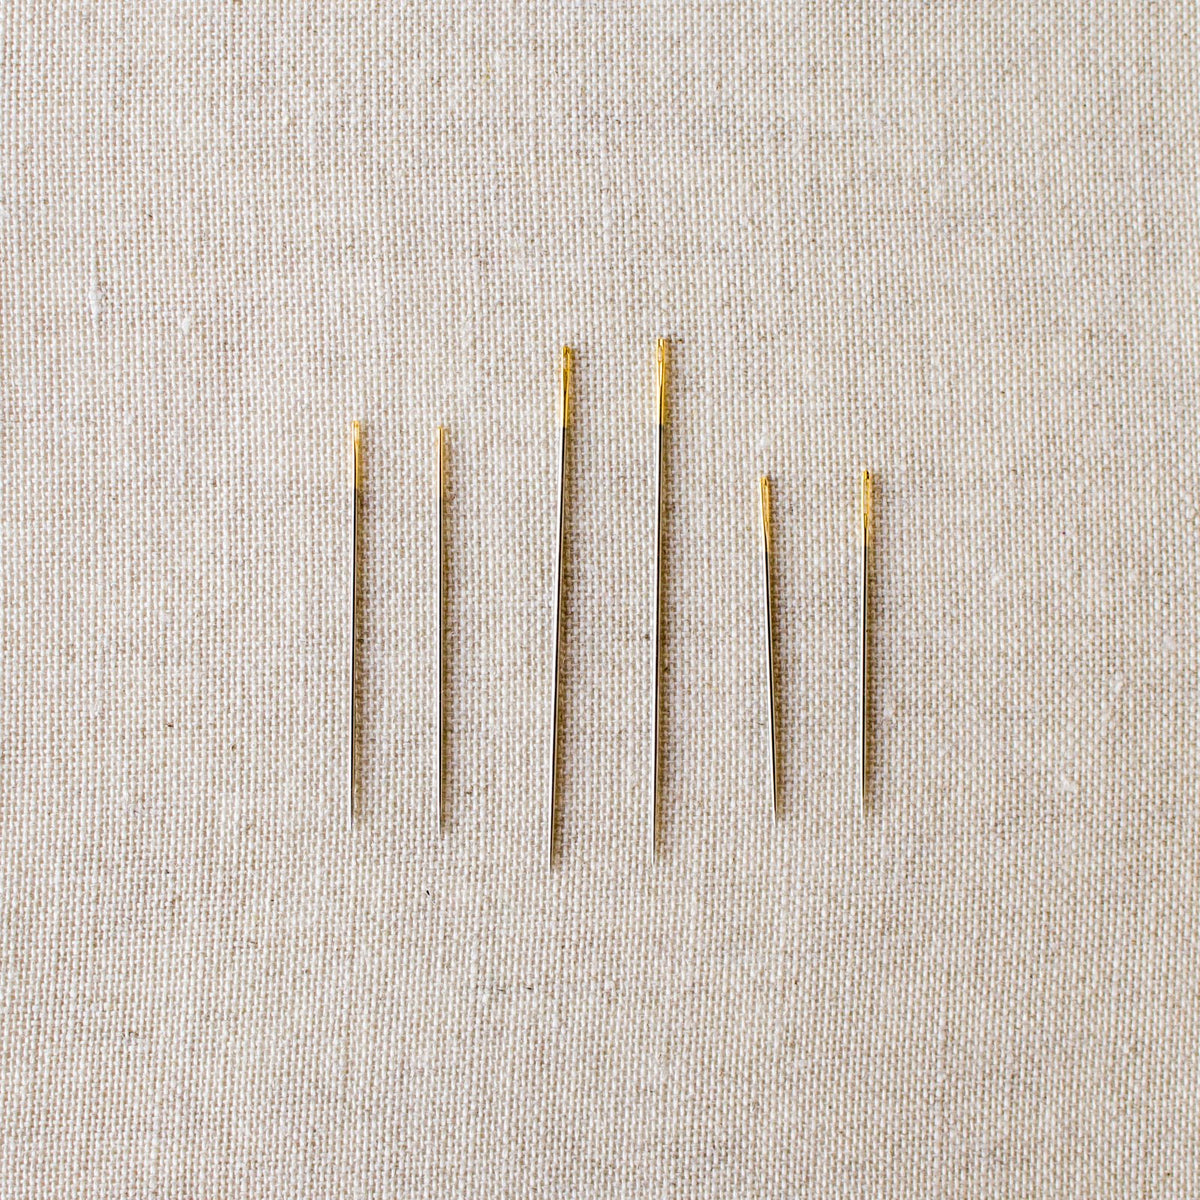 Tulip Premium Sashiko Needles - Assorted Long